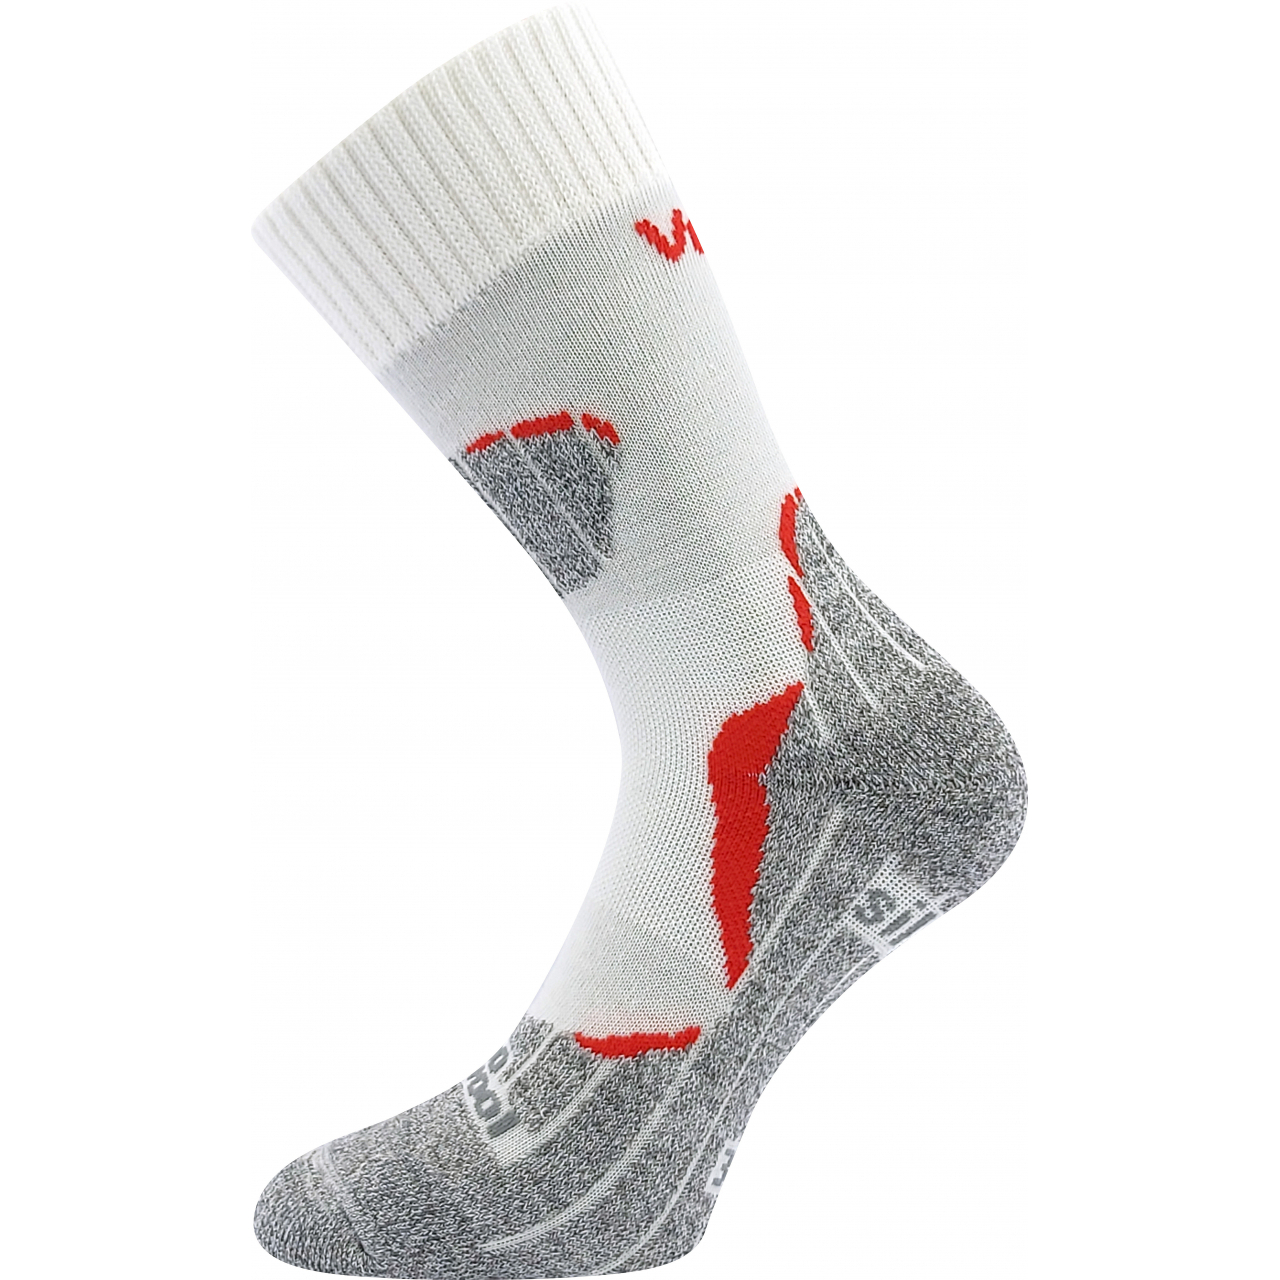 Ponožky unisex termo Voxx Dualix - bílé-šedé, 43-46